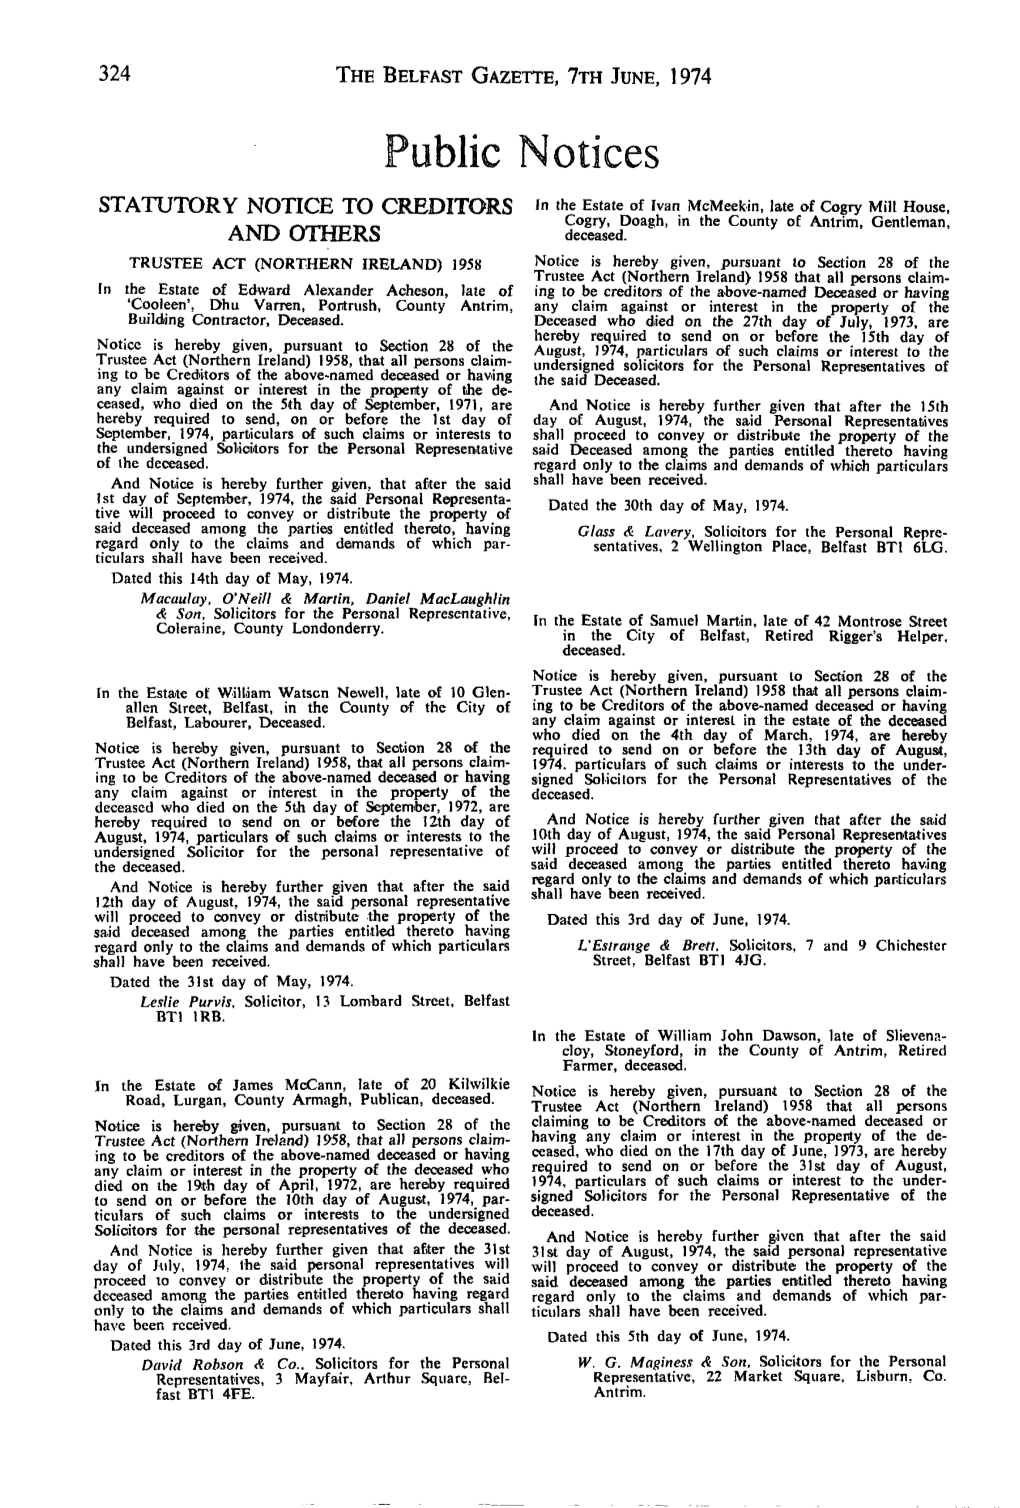 The Belfast Gazette, Vth June, 1974 Statutory Notice To